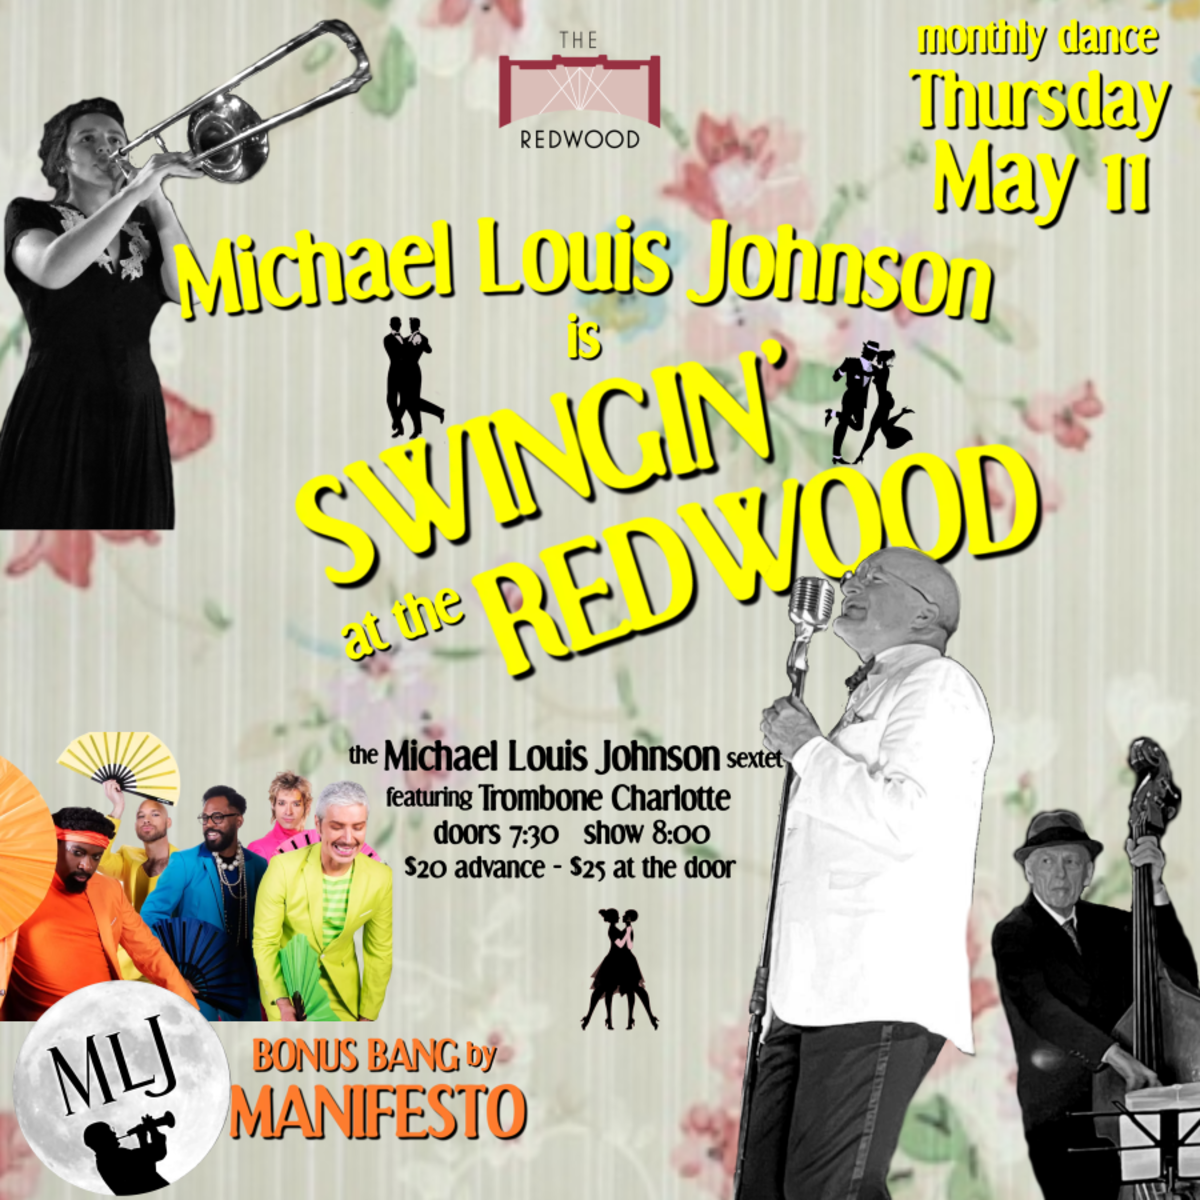 Michael Louis Johnson Swingin’ at the Redwood